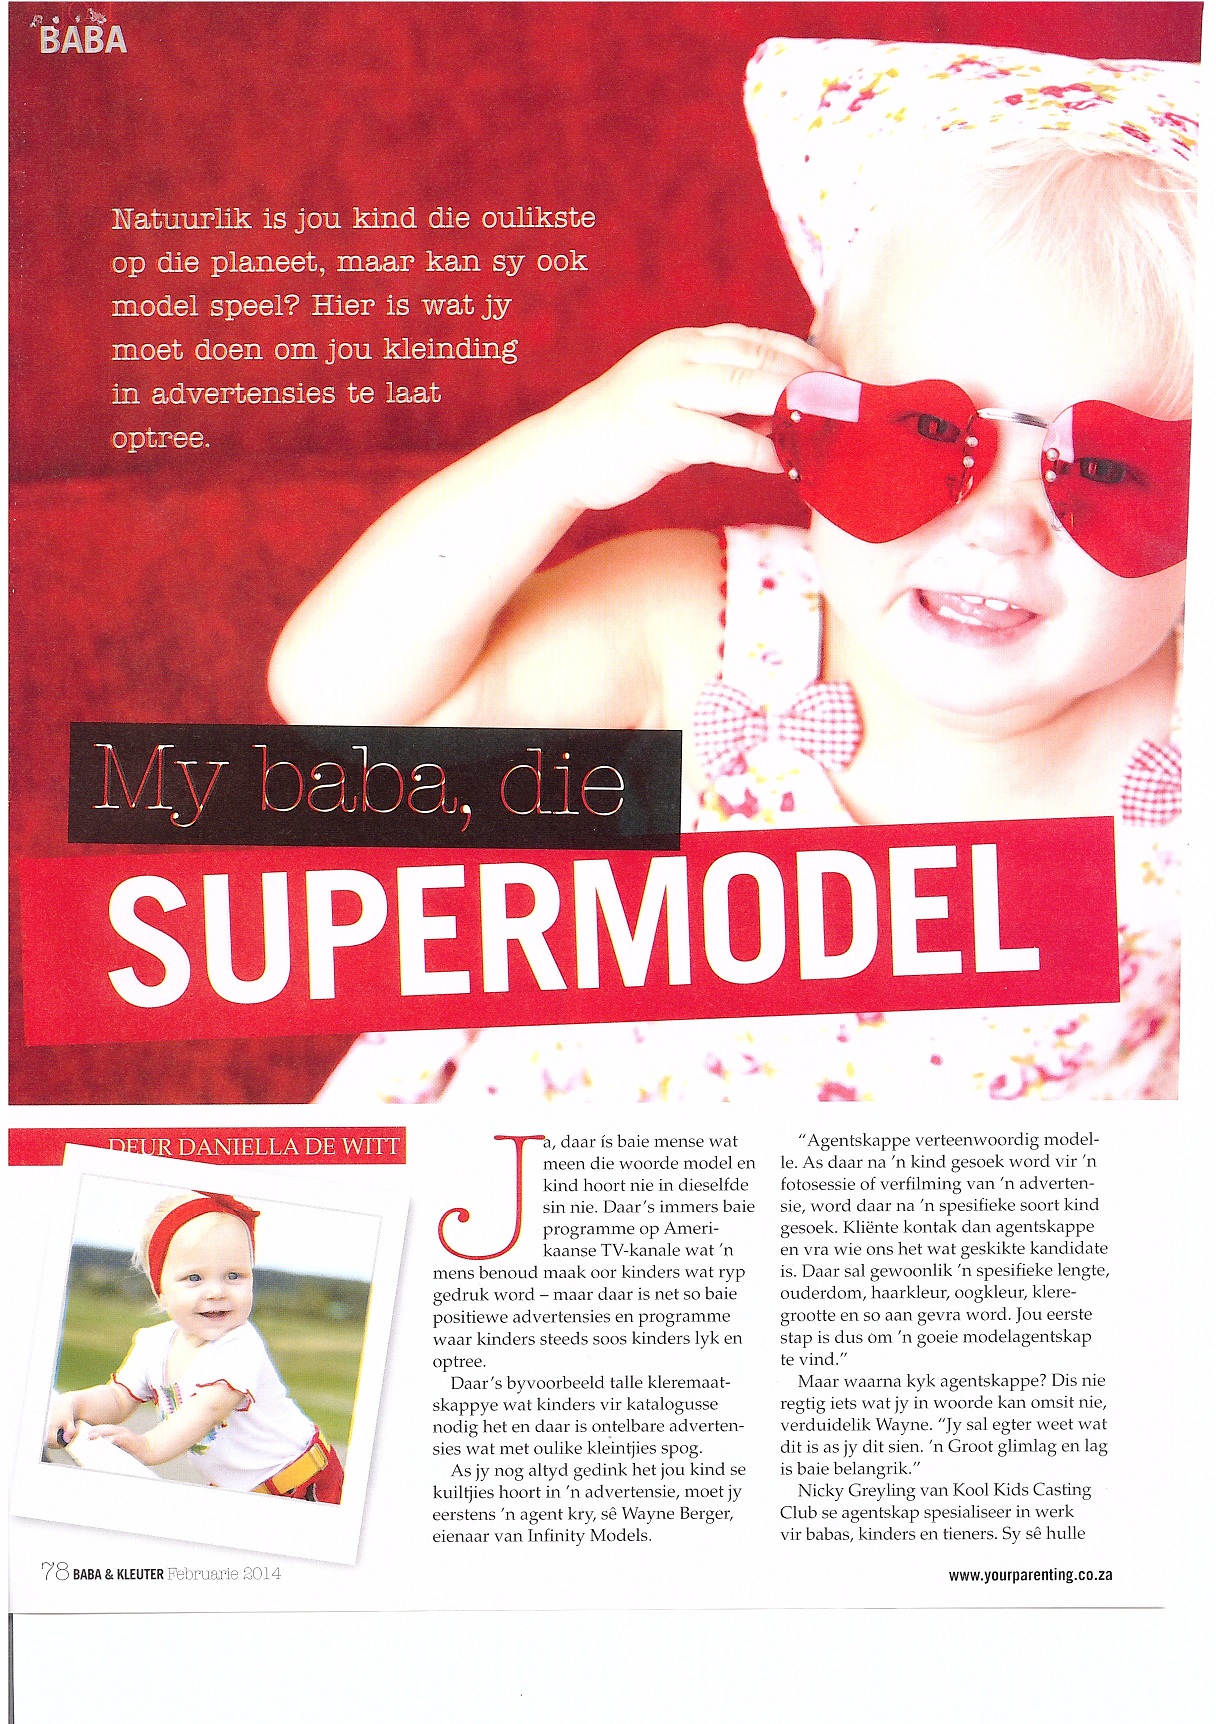 Baba en Kleuter Magazine Feb 2014 Article on Casting Industry Featuring Kool Kids P2